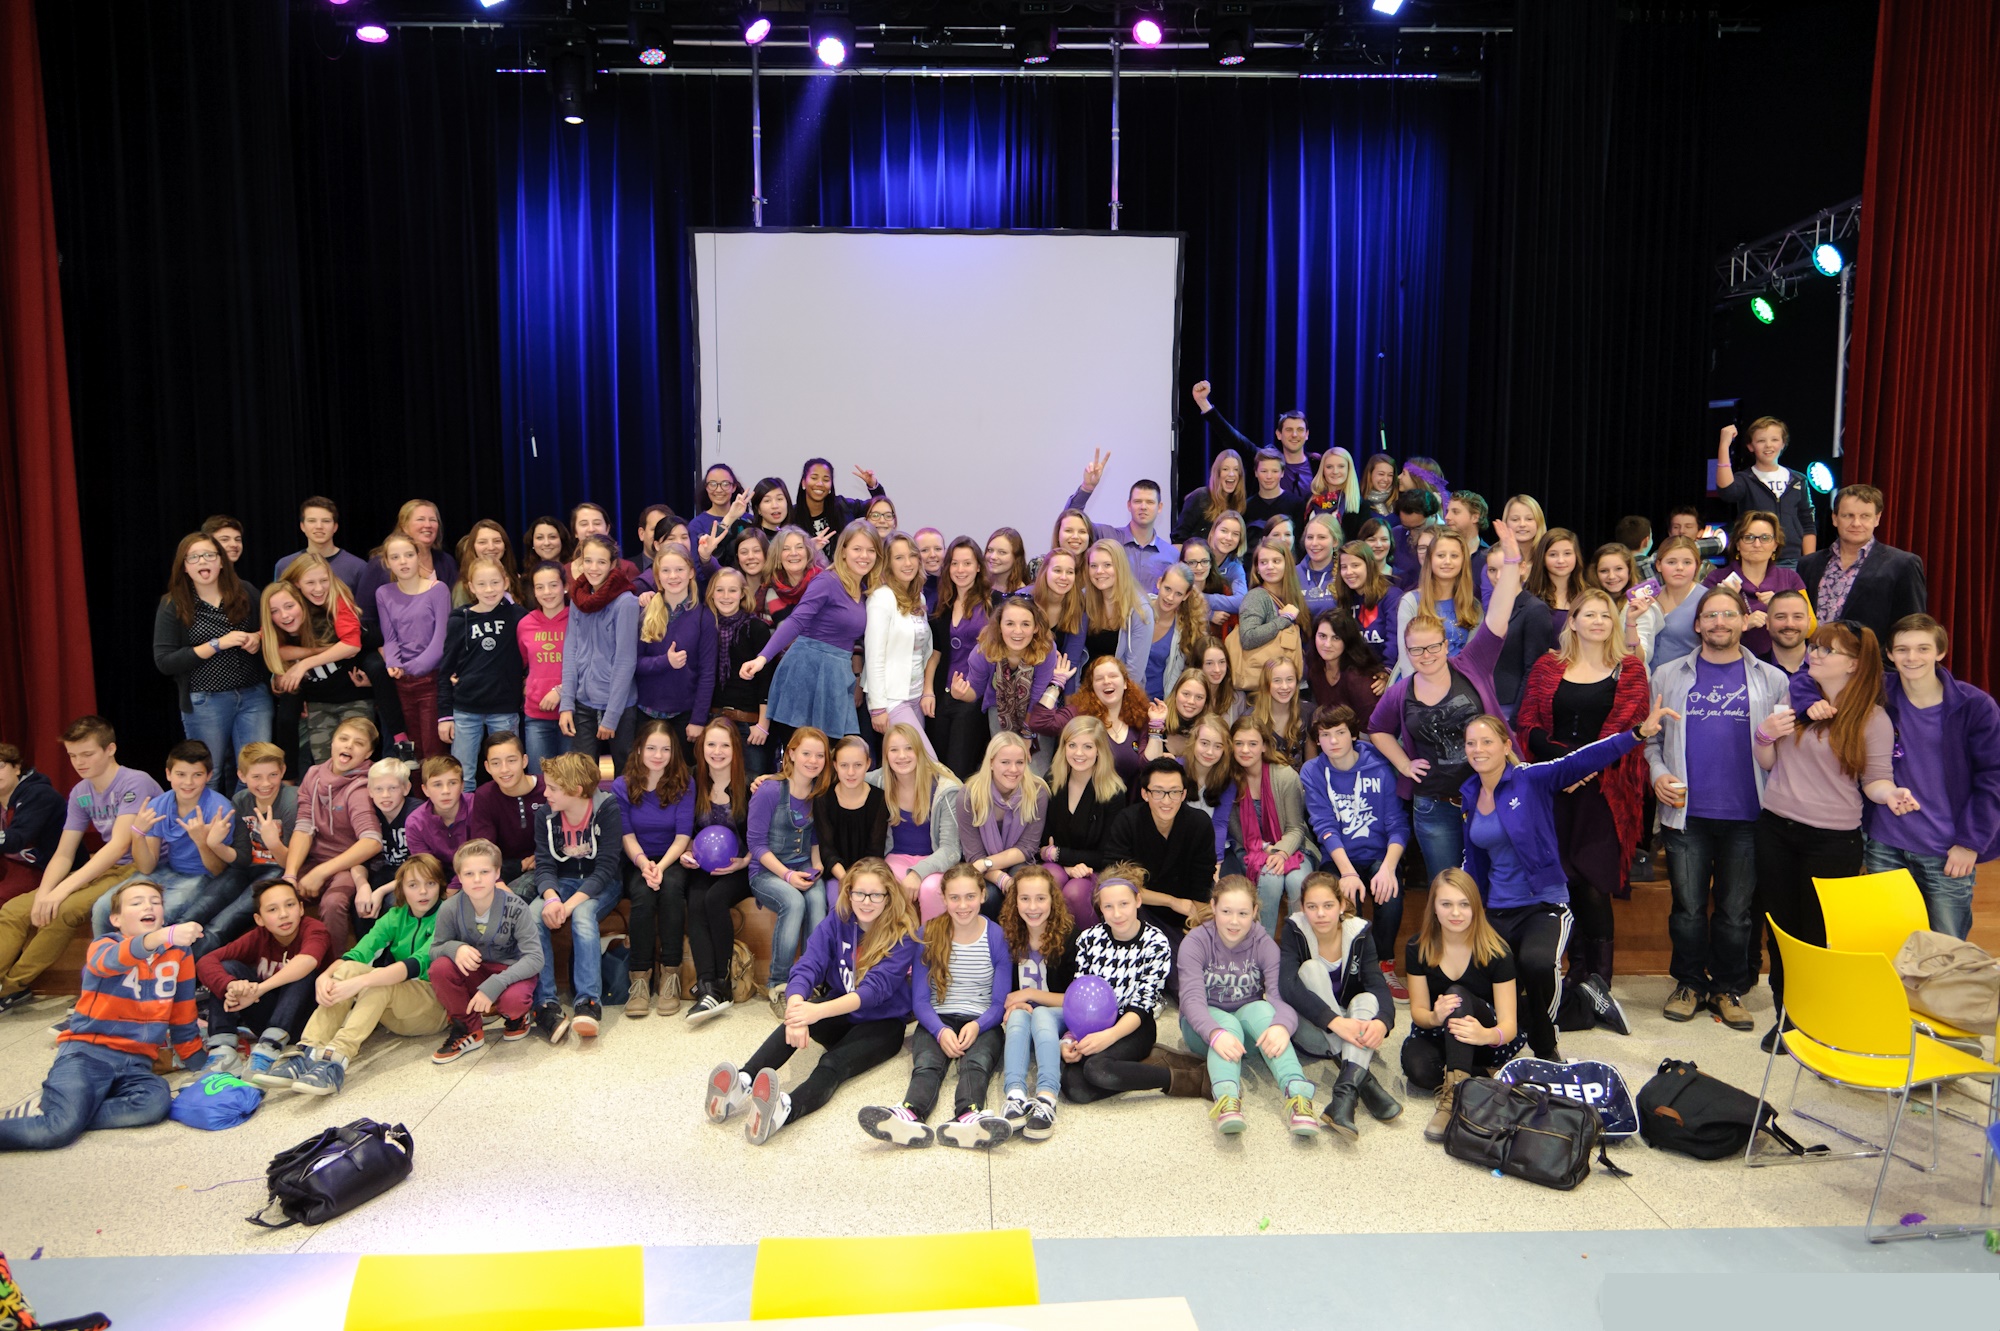 Students of Het Baarnsch Lyceum dressed in purple on Paarse Vrijdag 2013